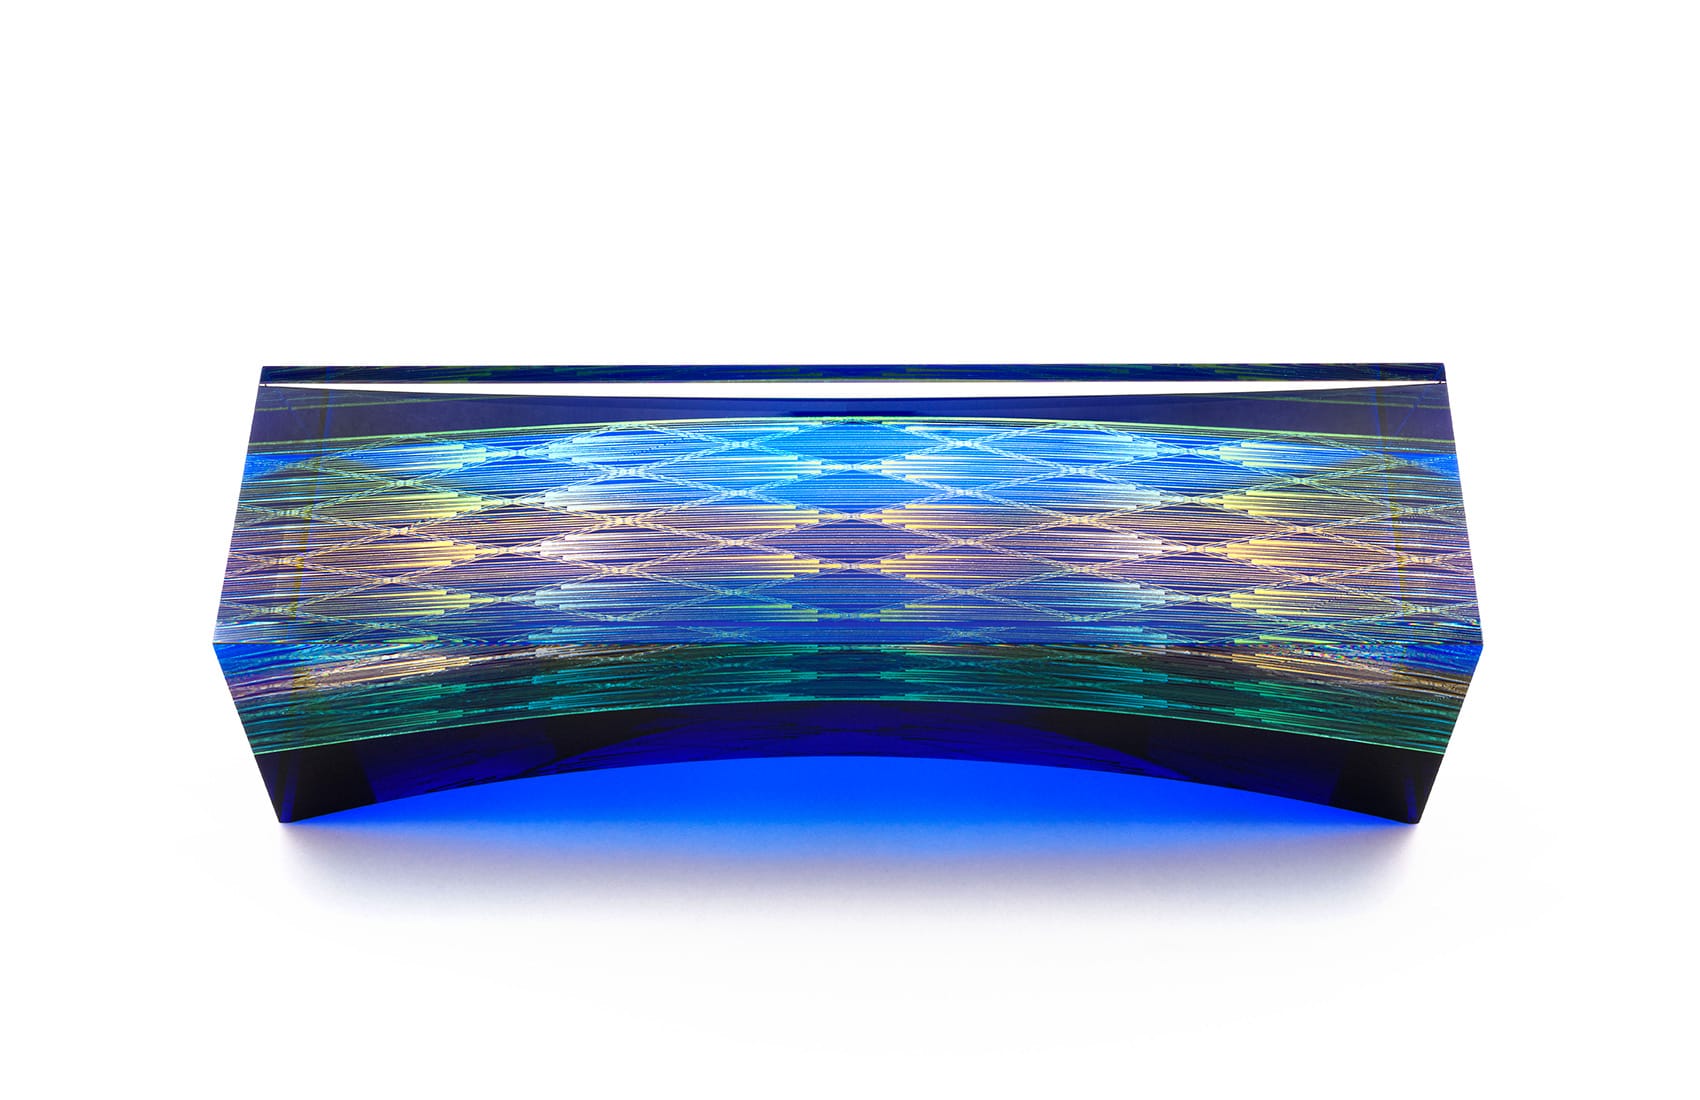 Kirikane Glass Plate “Magpie Bridge”